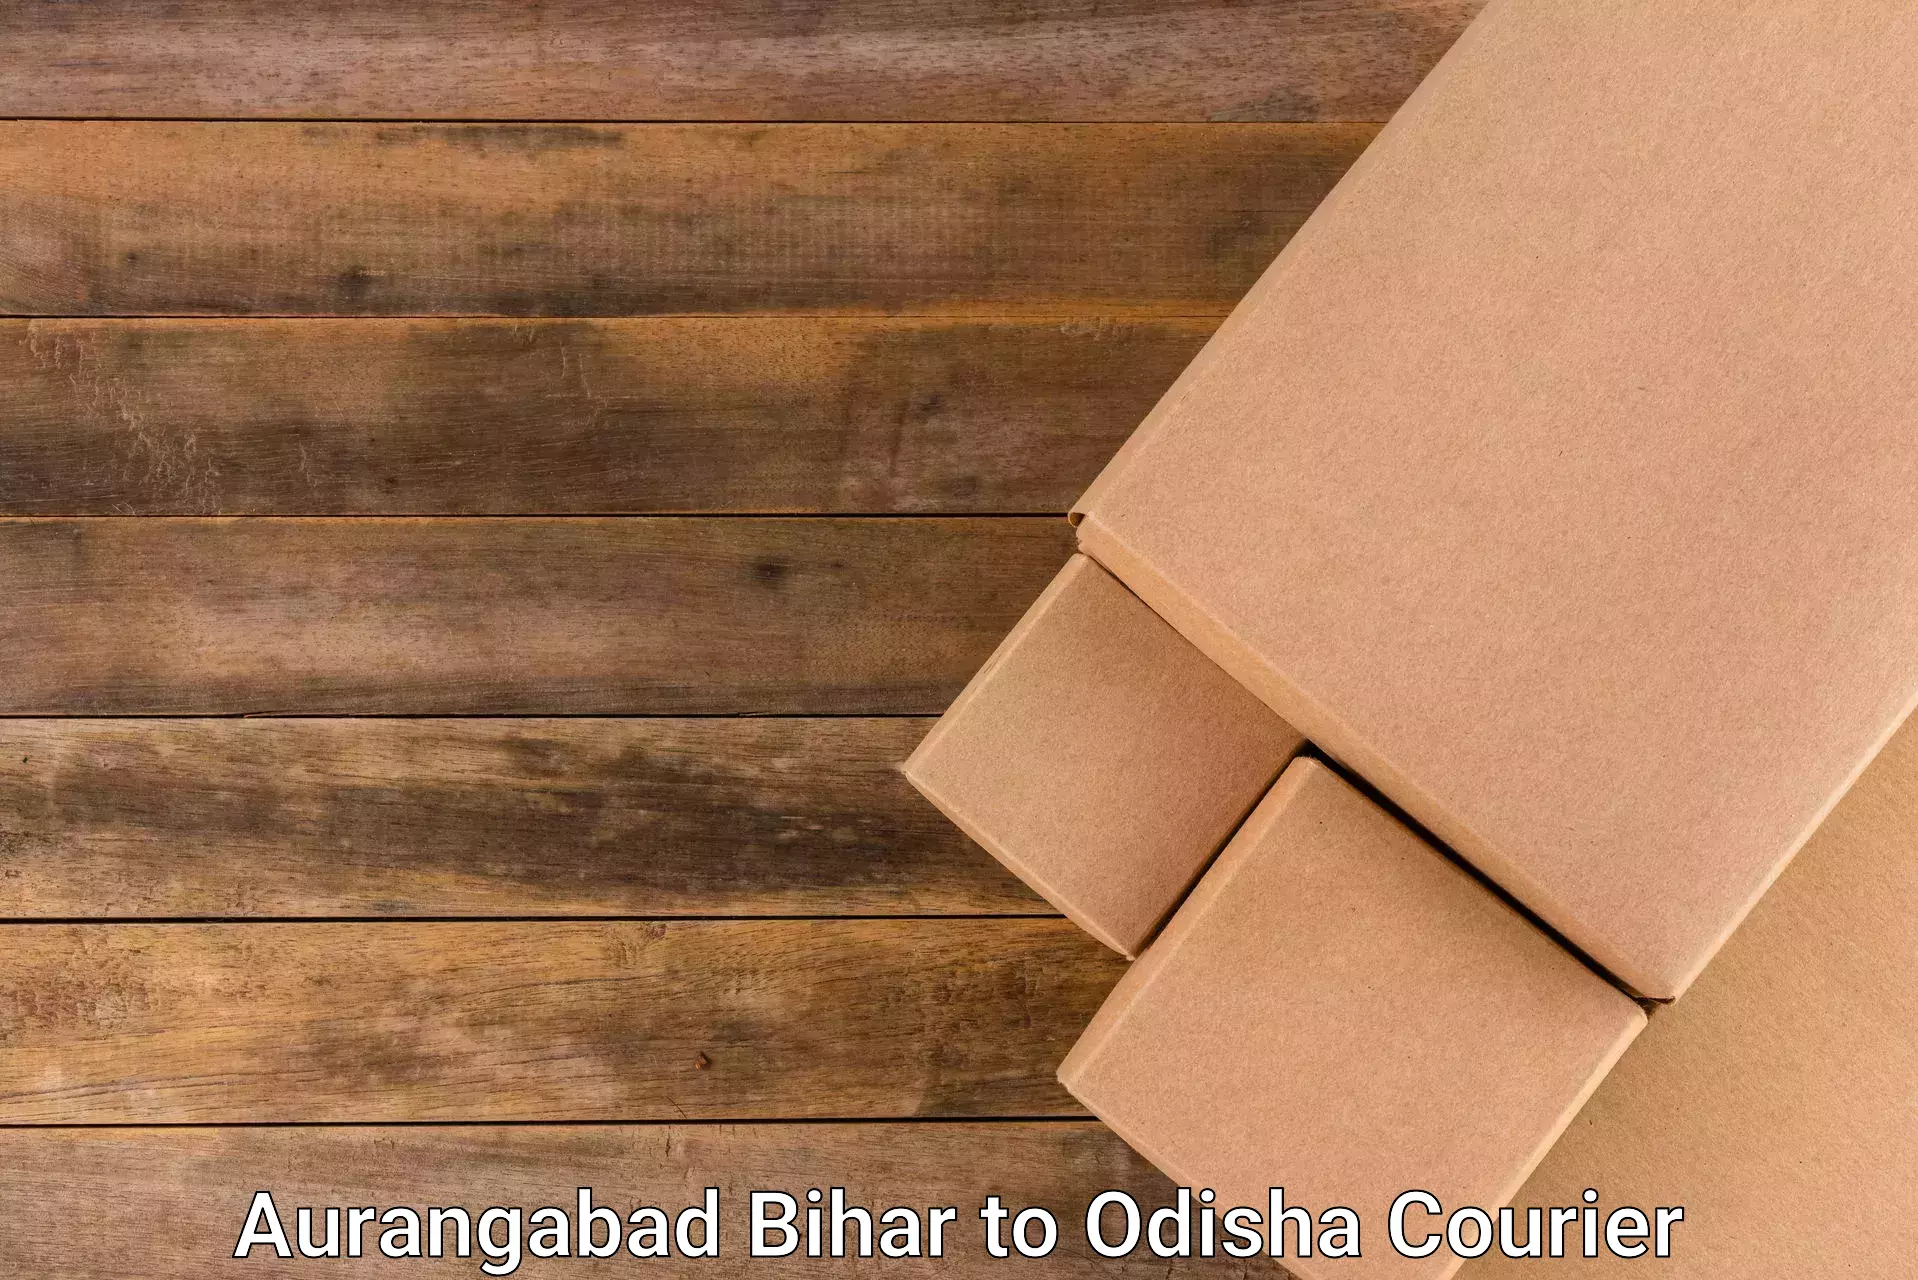 Online package tracking Aurangabad Bihar to Jagannathprasad